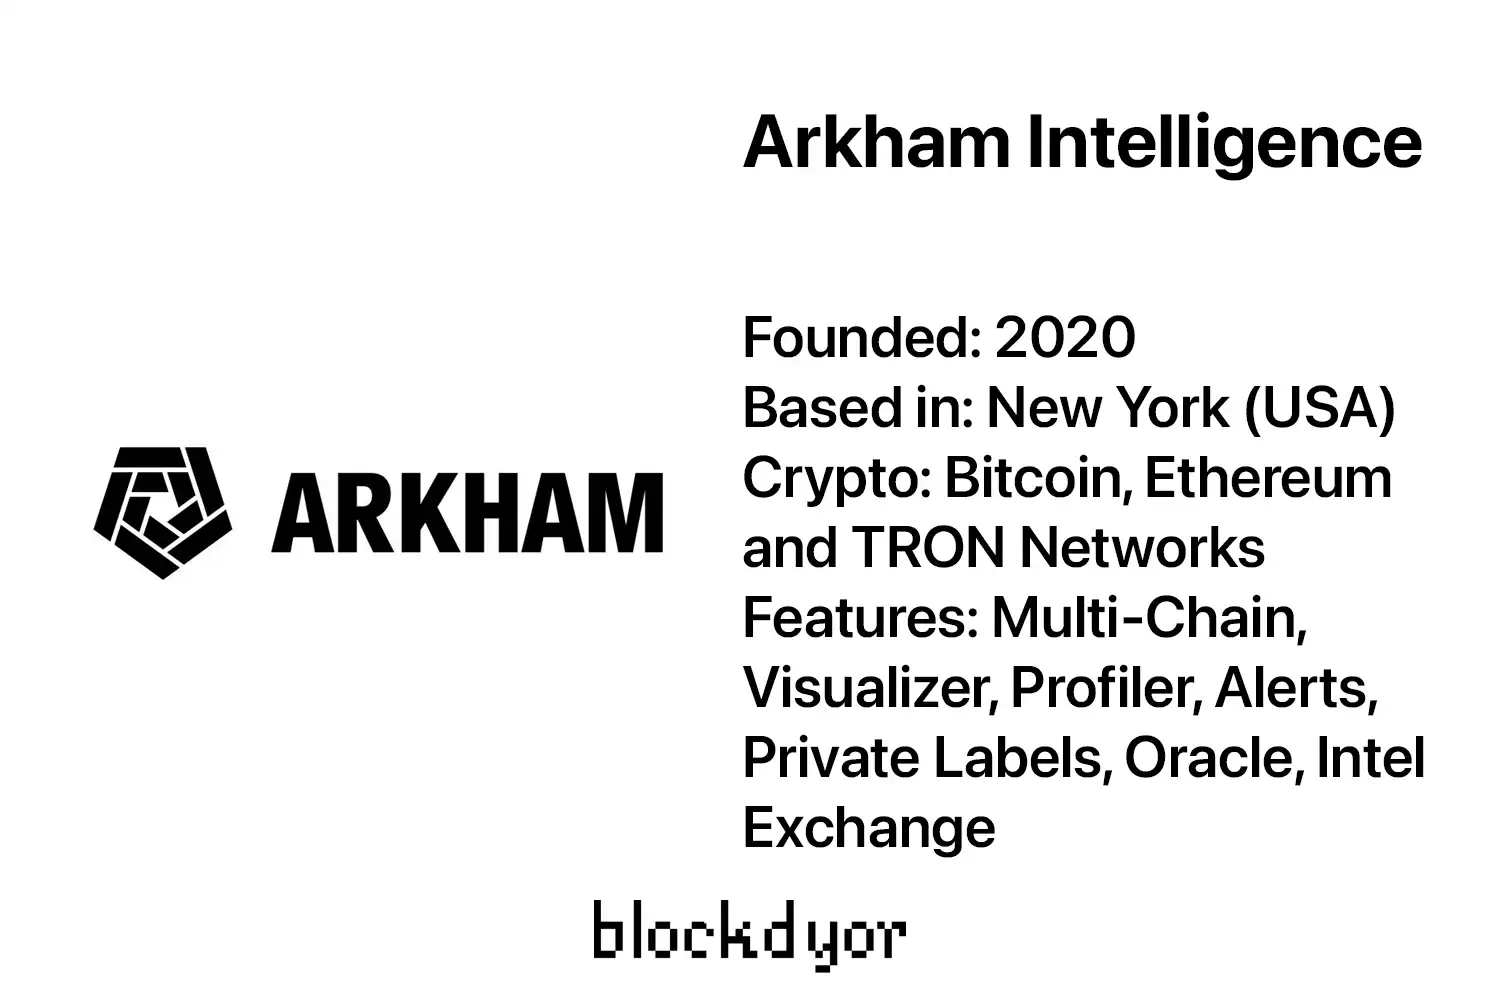 Arkham Intelligence Overview